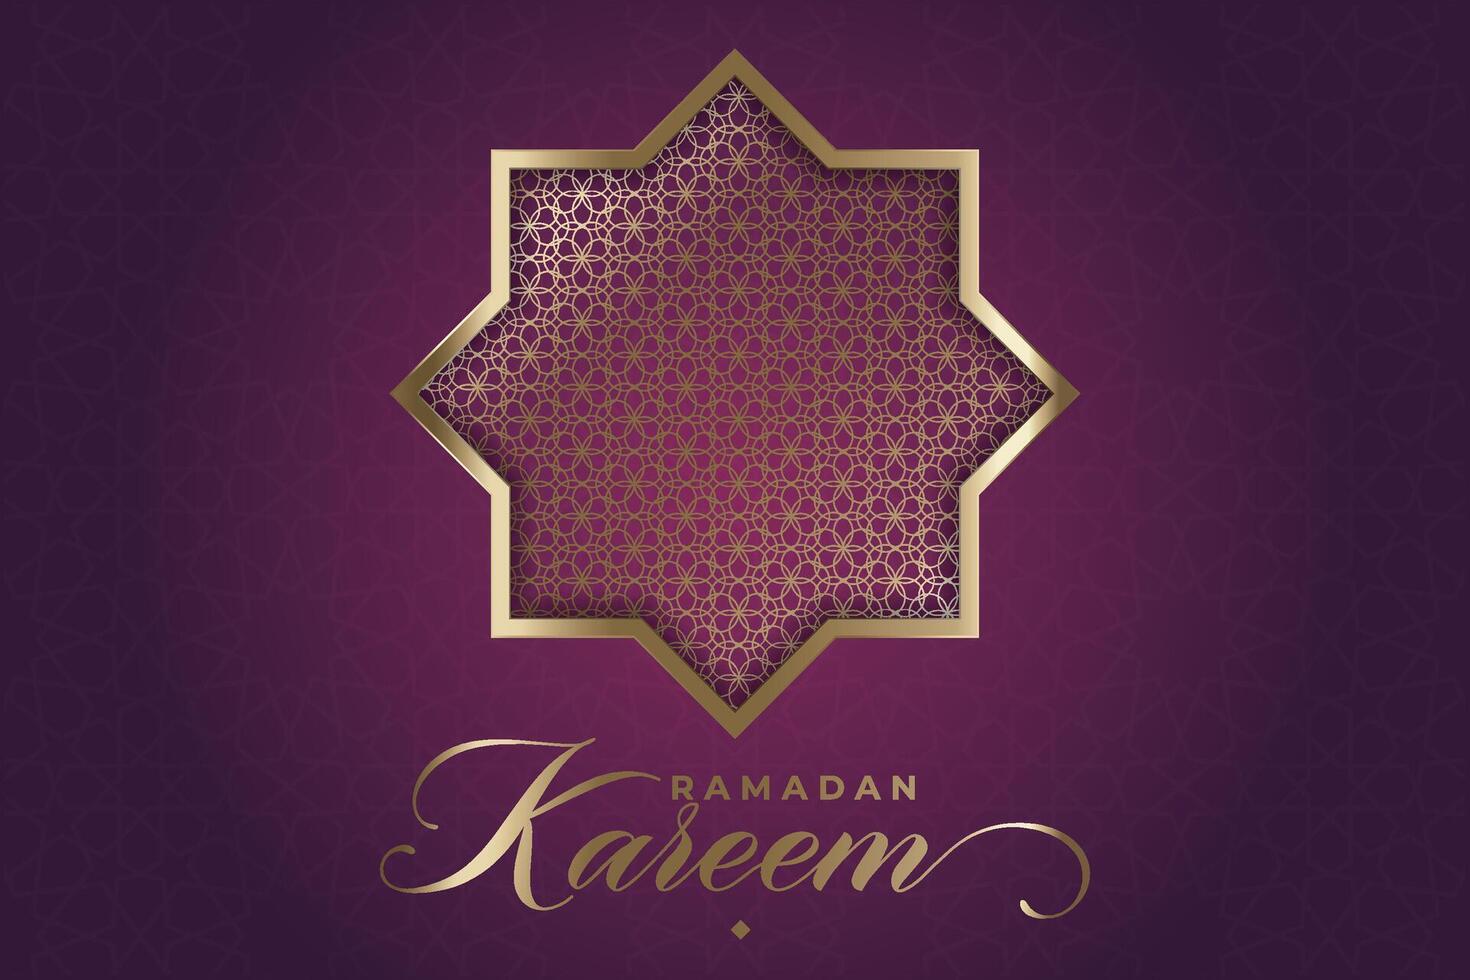 élégant luxe ramadan, eid mubarak décoratif vacances carte vecteur